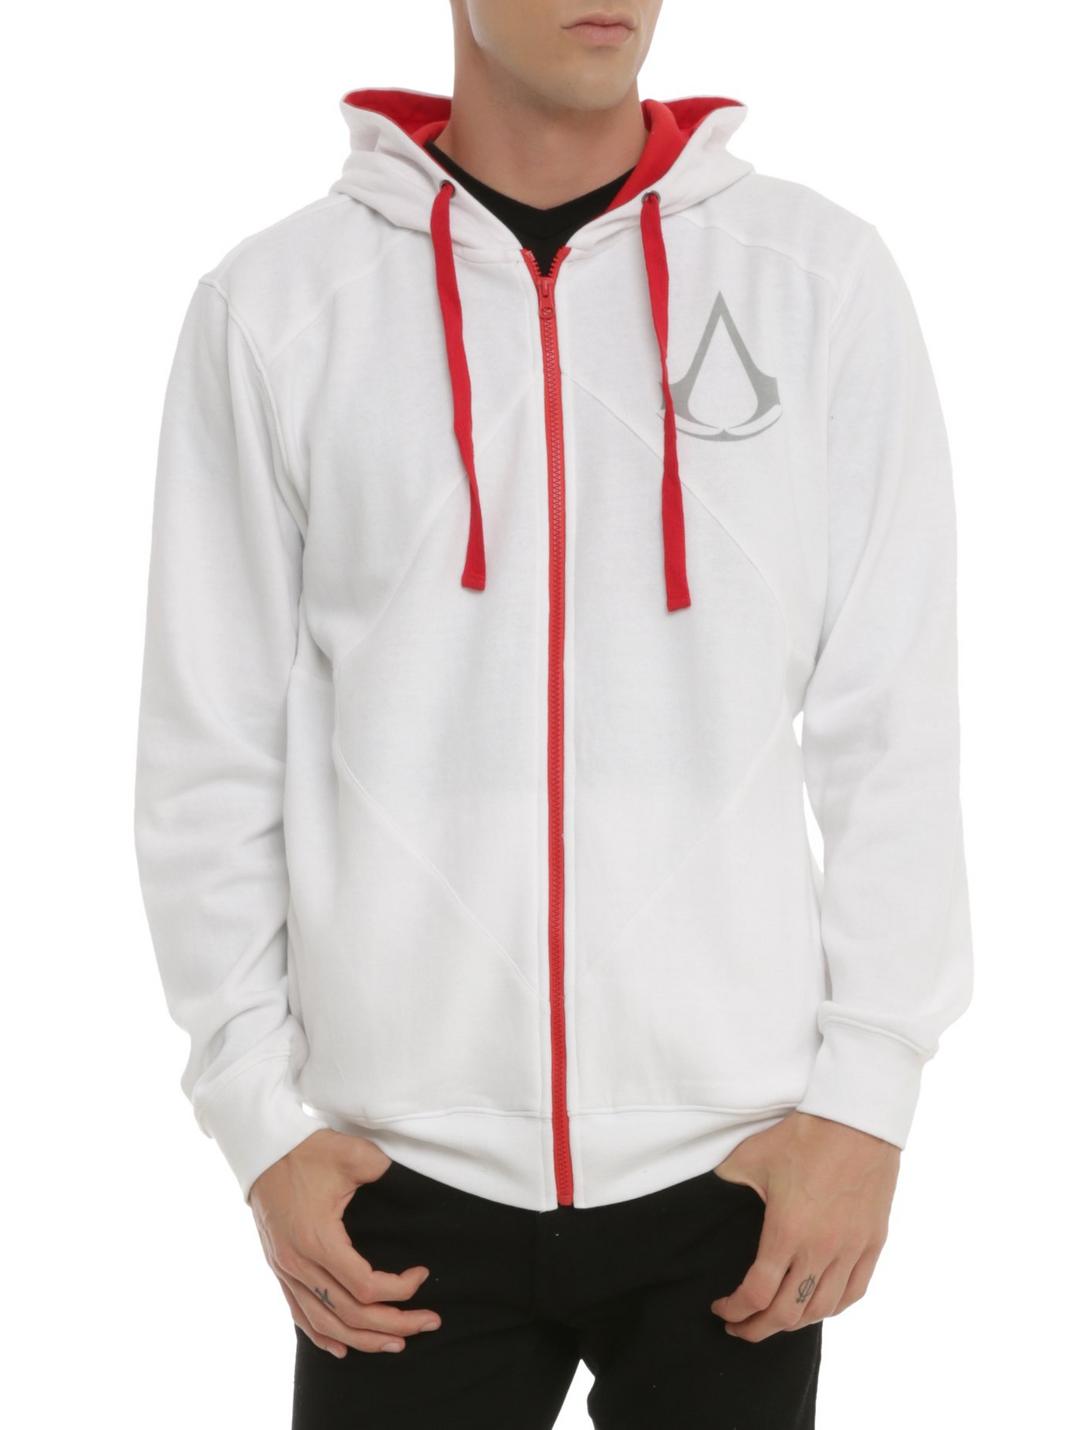 Assassins Creed Unisex Hoodies with Hat Full-Zip Active Sweatshirt Pocket Hoodies Teenagers Pullover 